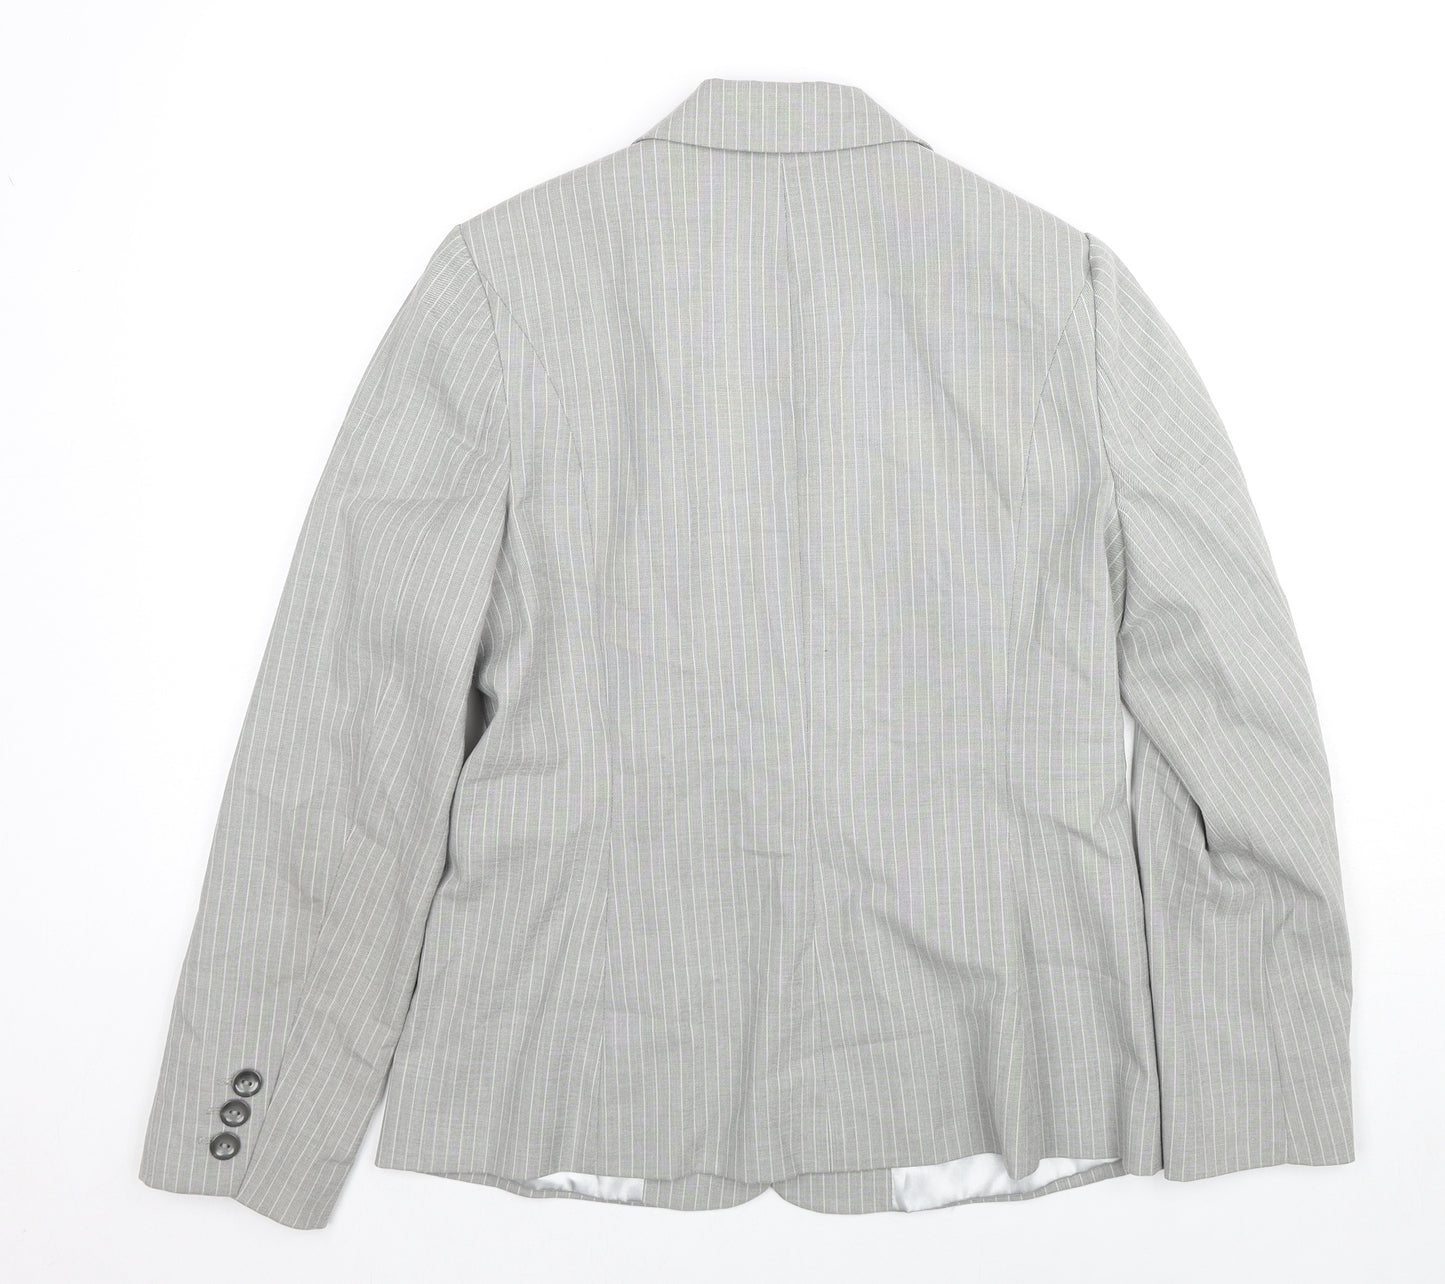 Planet Womens Grey Striped Polyester Jacket Blazer Size 10